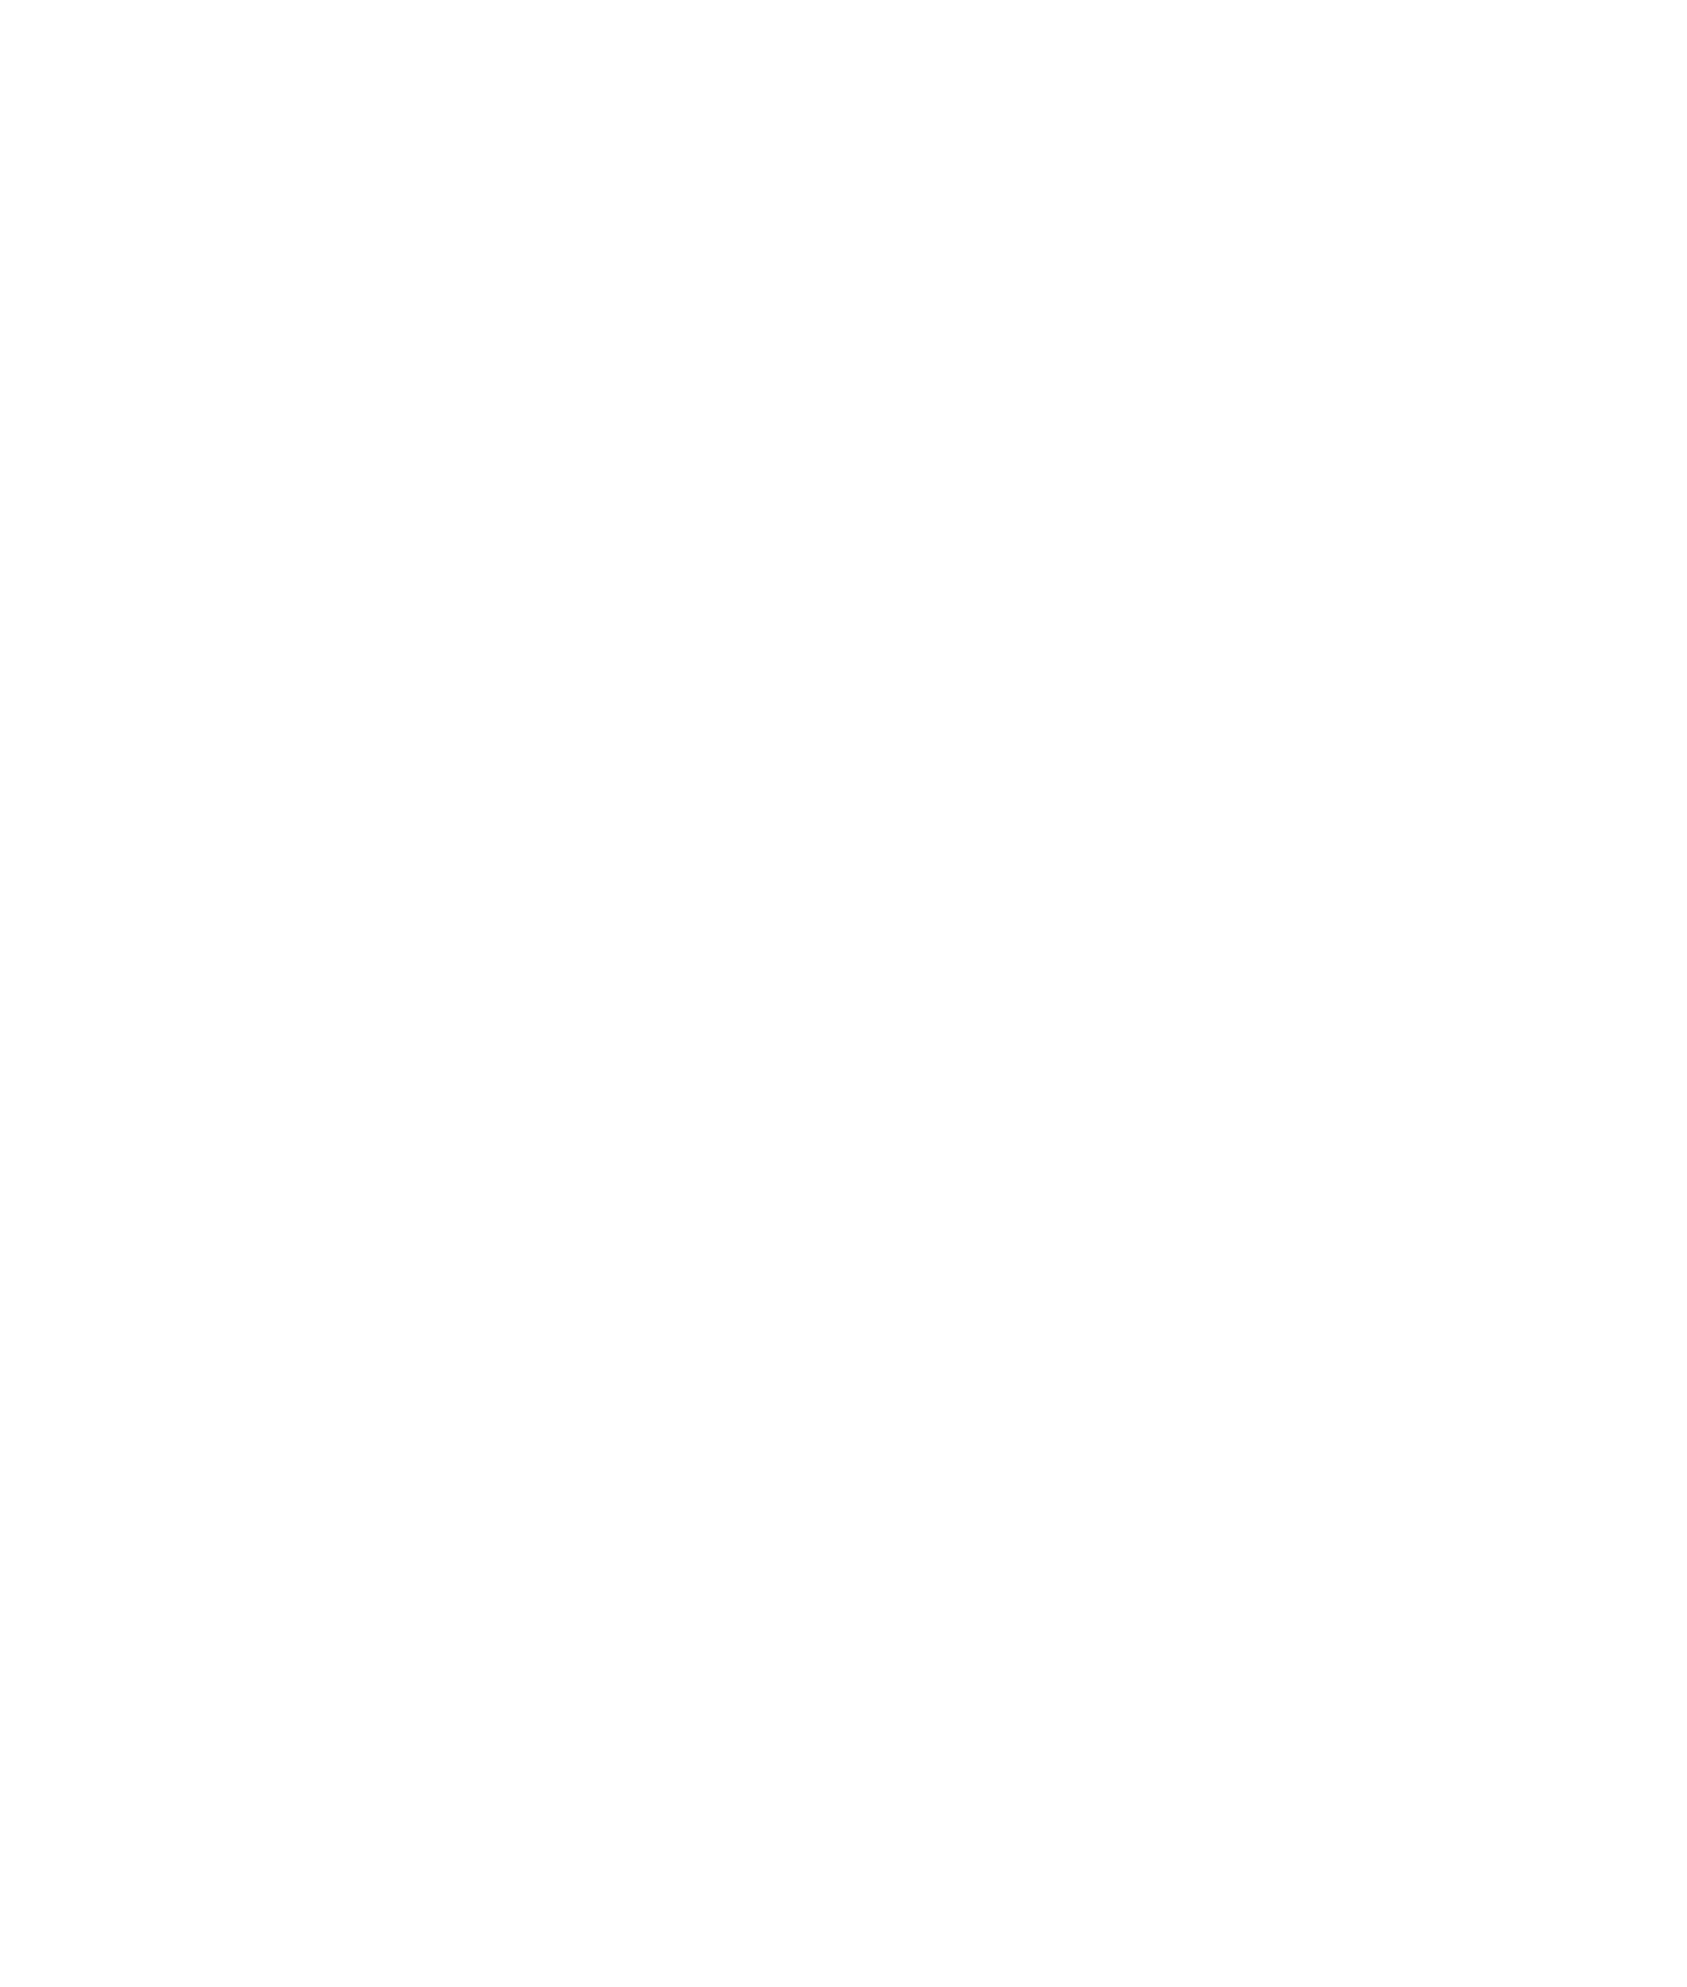 CEPAD